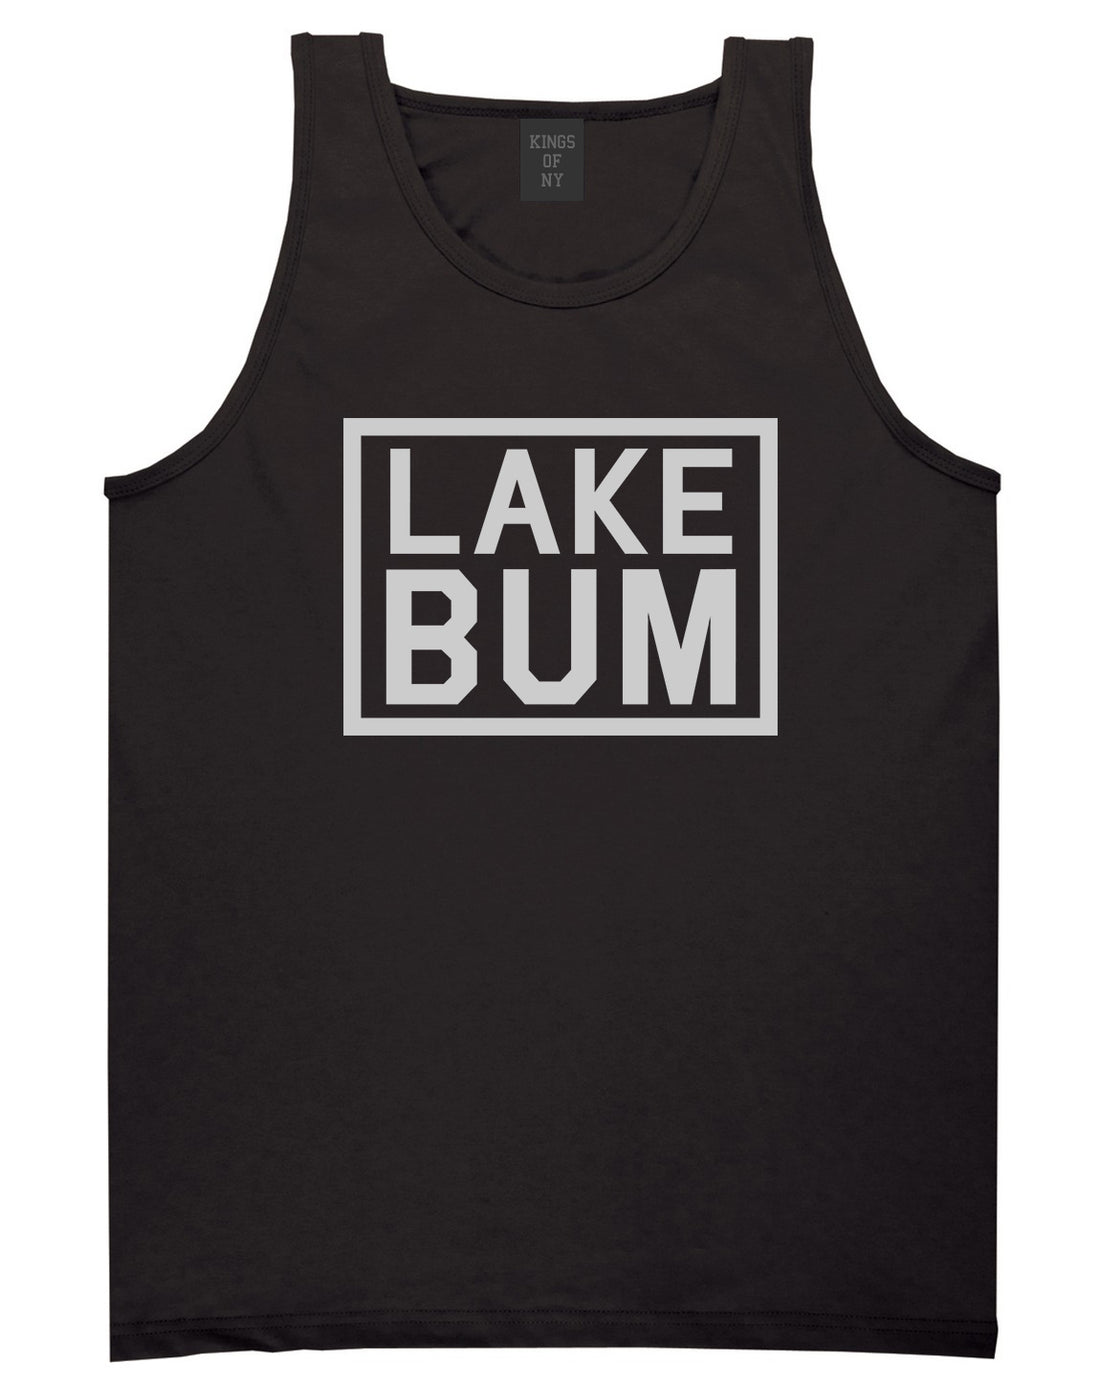 Lake Bum Box Mens Tank Top Shirt Black